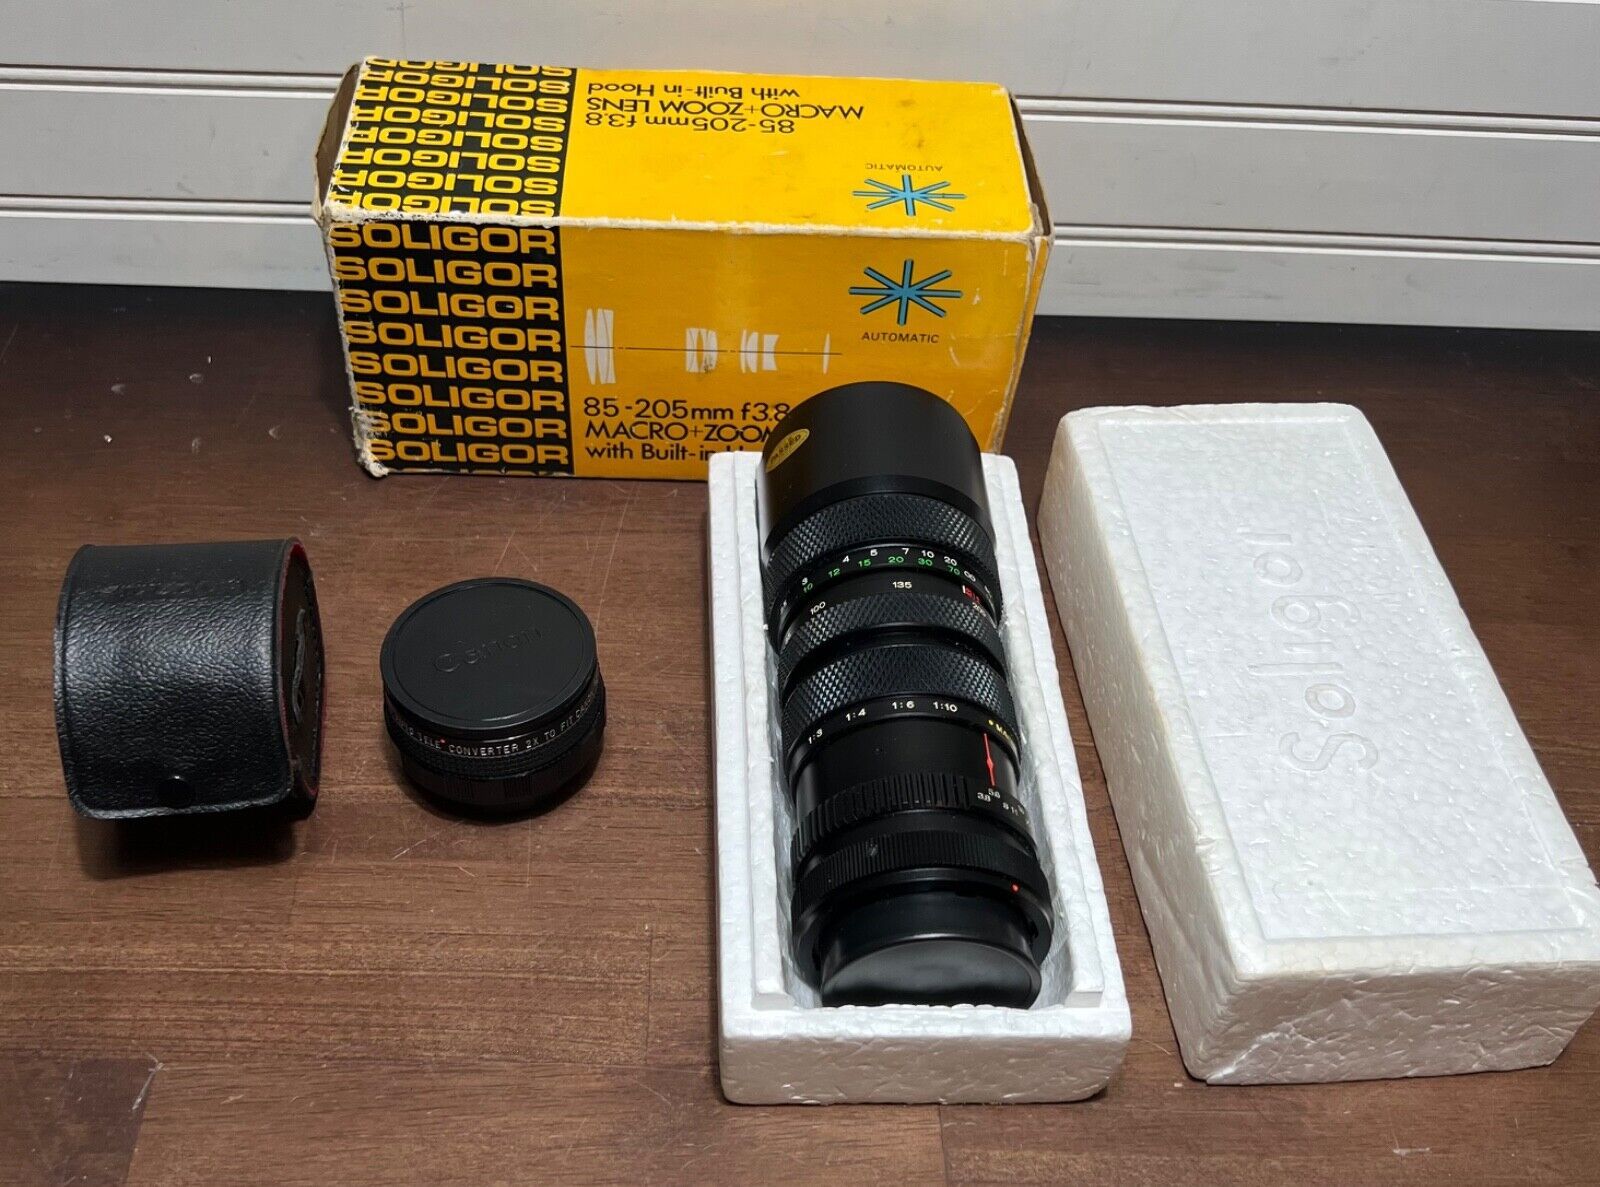 Soligor macro zoom 85-205mm f/3.8mm & 2X tele converter Lens for Canon FD Mount - $50.00